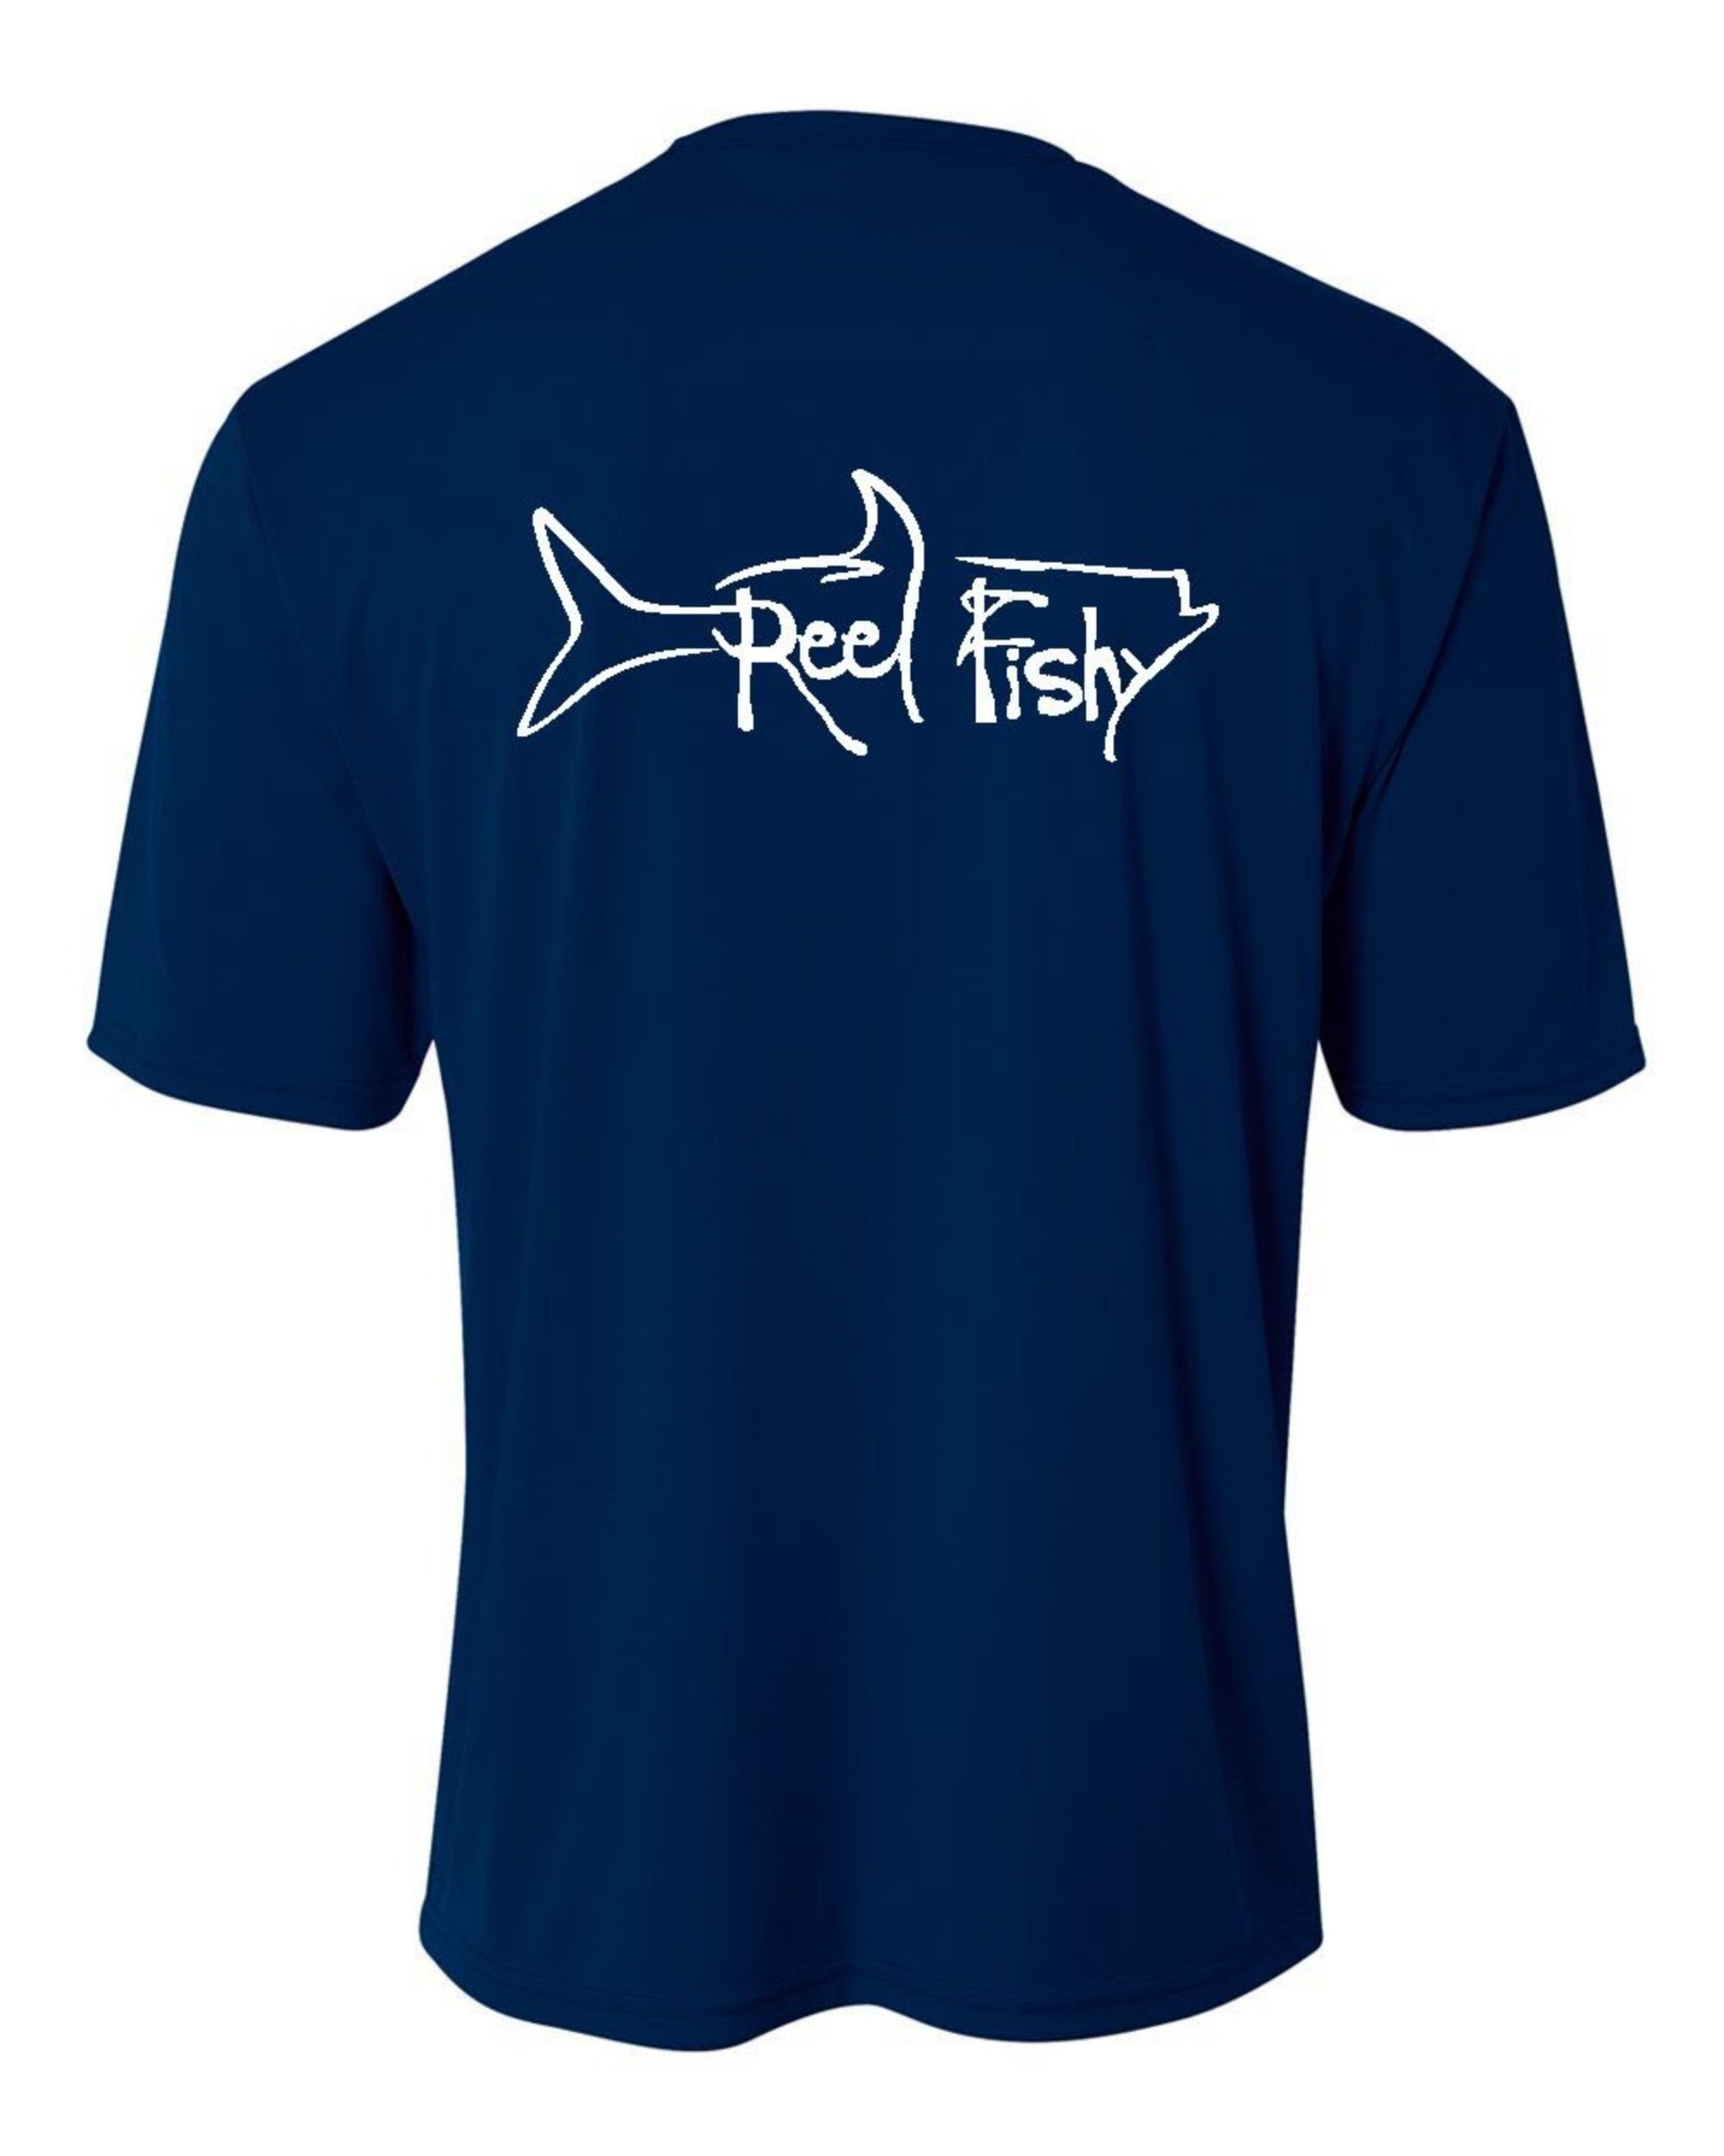 Youth Performance Dry-Fit Tarpon Fishing Shirts 50+Upf Sun Protection - Reel Fishy Apparel L / Navy S/S